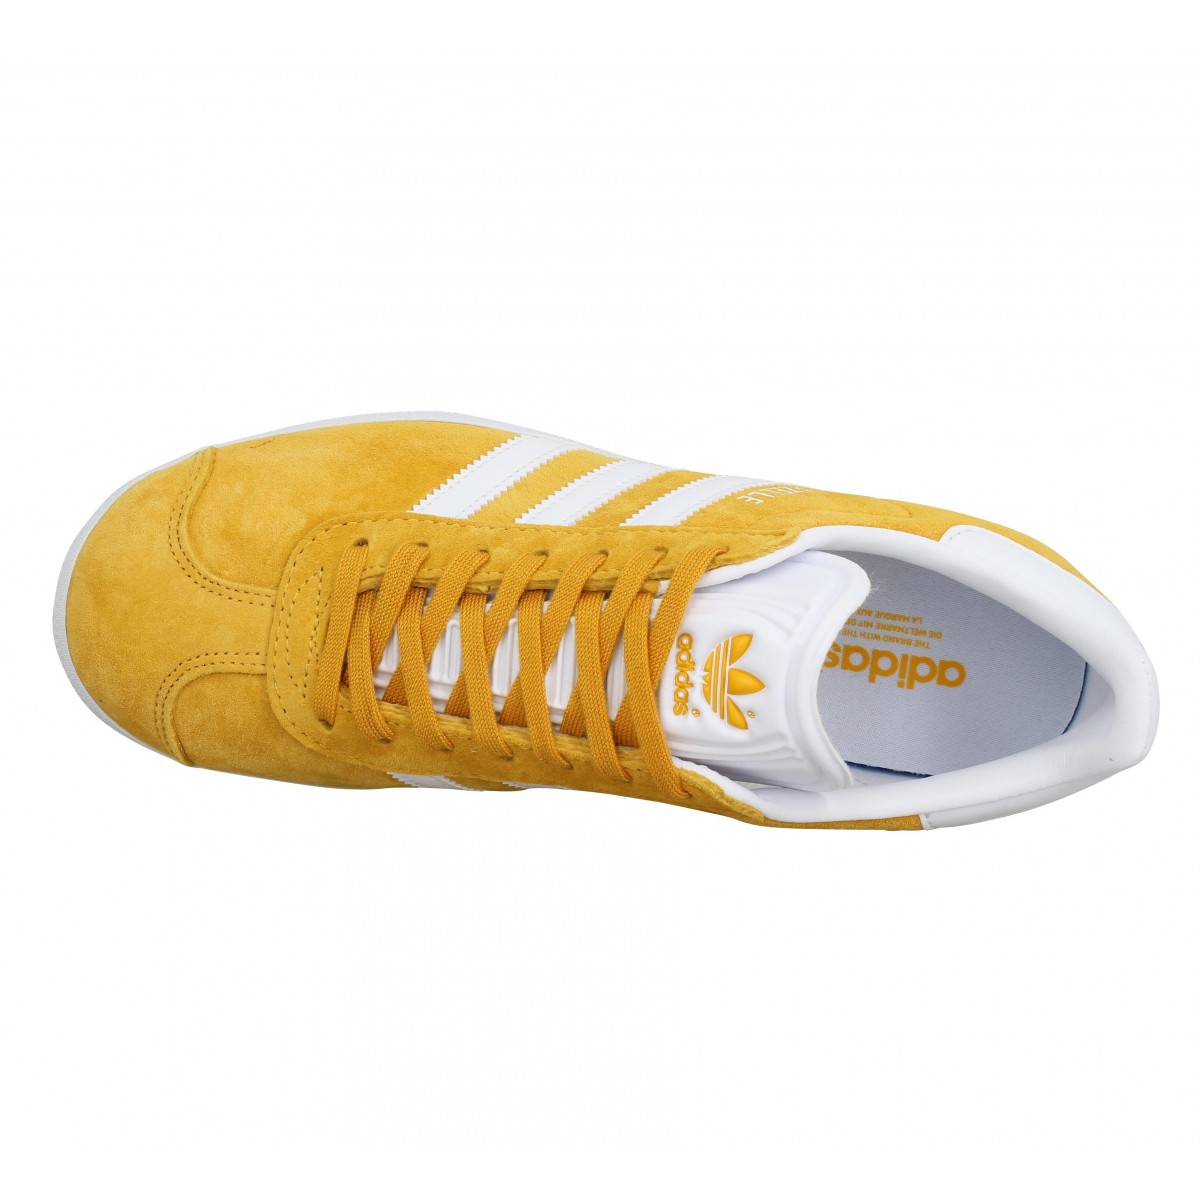 Adidas gazelle velours femme jaune femme | Fanny chaussures